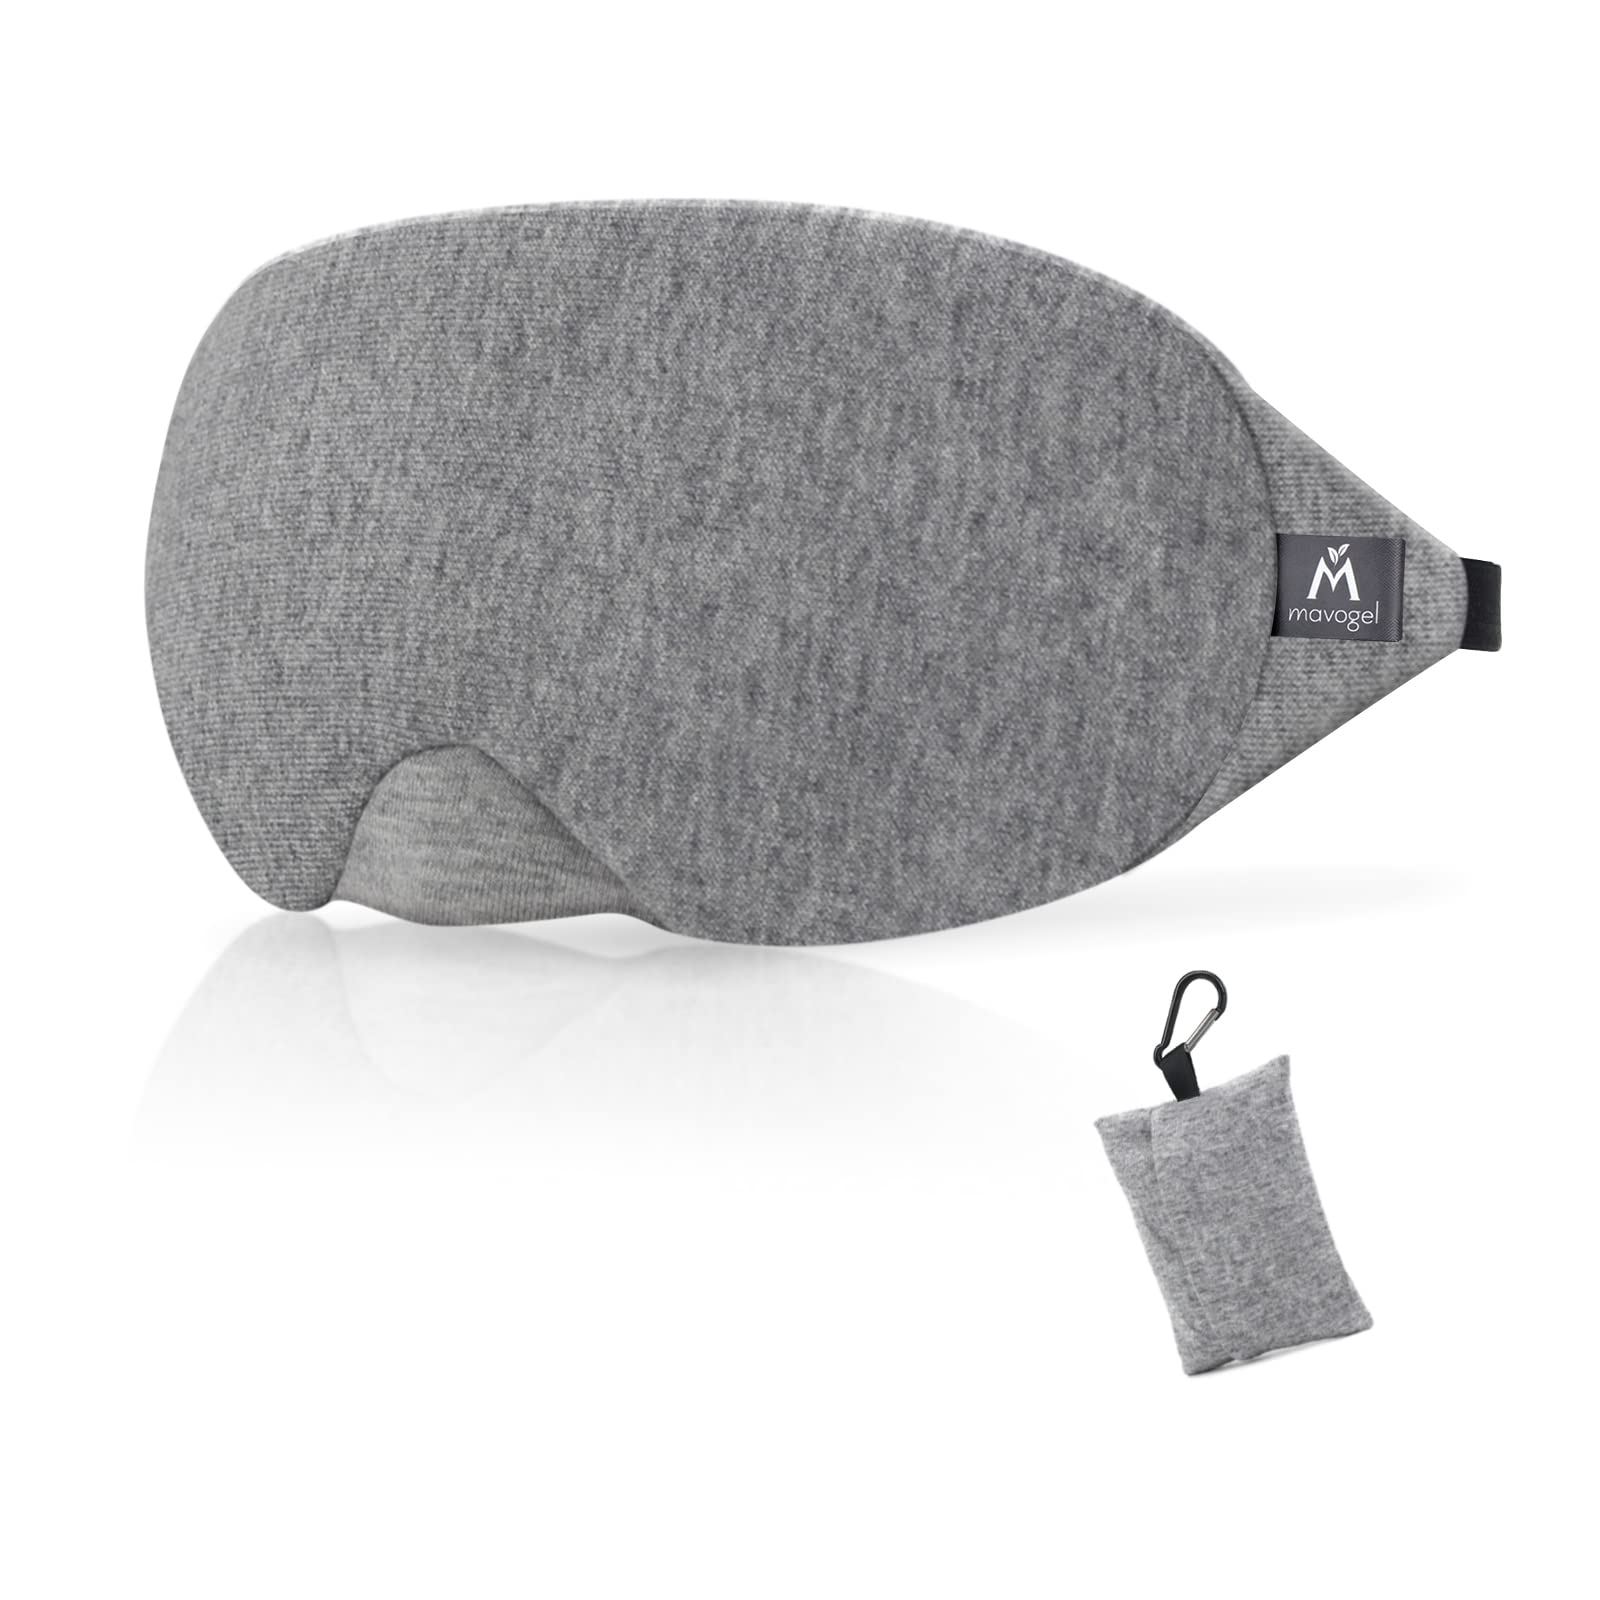 Mavogel Cotton Sleep Eye Mask - Updated Design Light Blocking Soft and Comfortable Night Eye Mask for Men Women, Eye Blinder for Travel/Sleeping/Shift Work, Includes Pouch, Grey